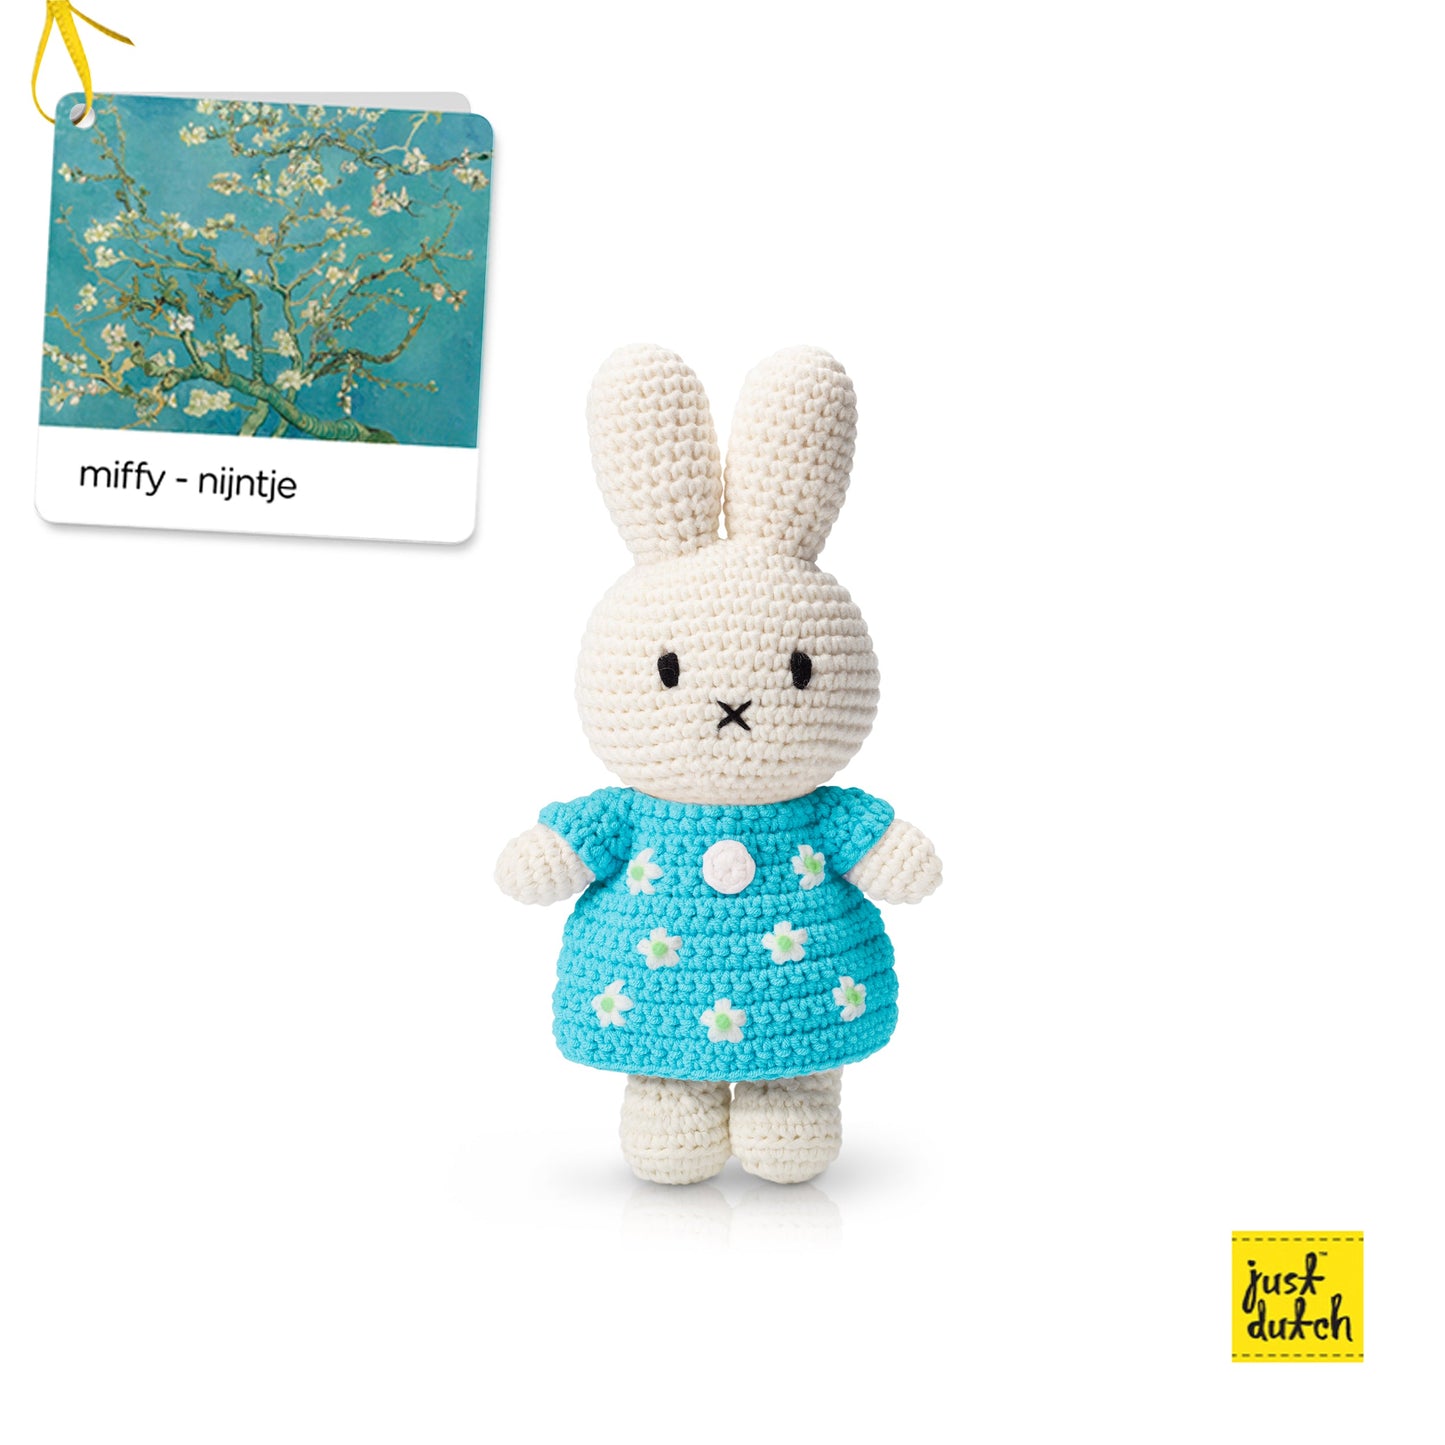 Miffy Handmade Knit Doll with Van Gogh Almond Blossom-Inspired Dress